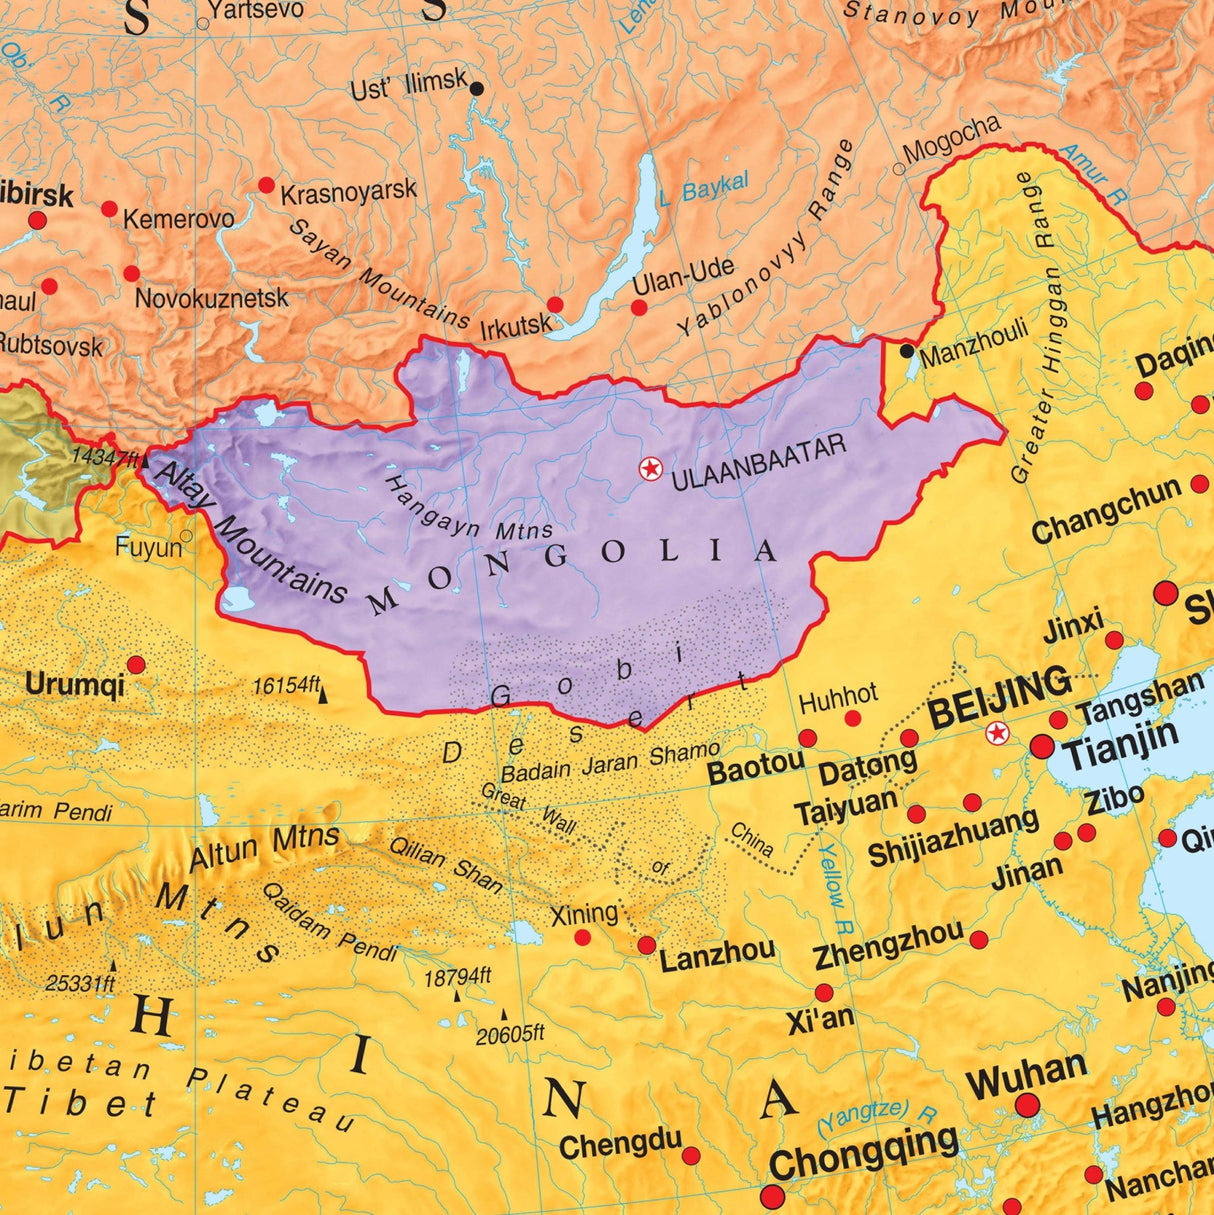 Asia Advanced Political Wall Map - KA-ASIA-ADV-POL-57X42-PAPER - Ultimate Globes